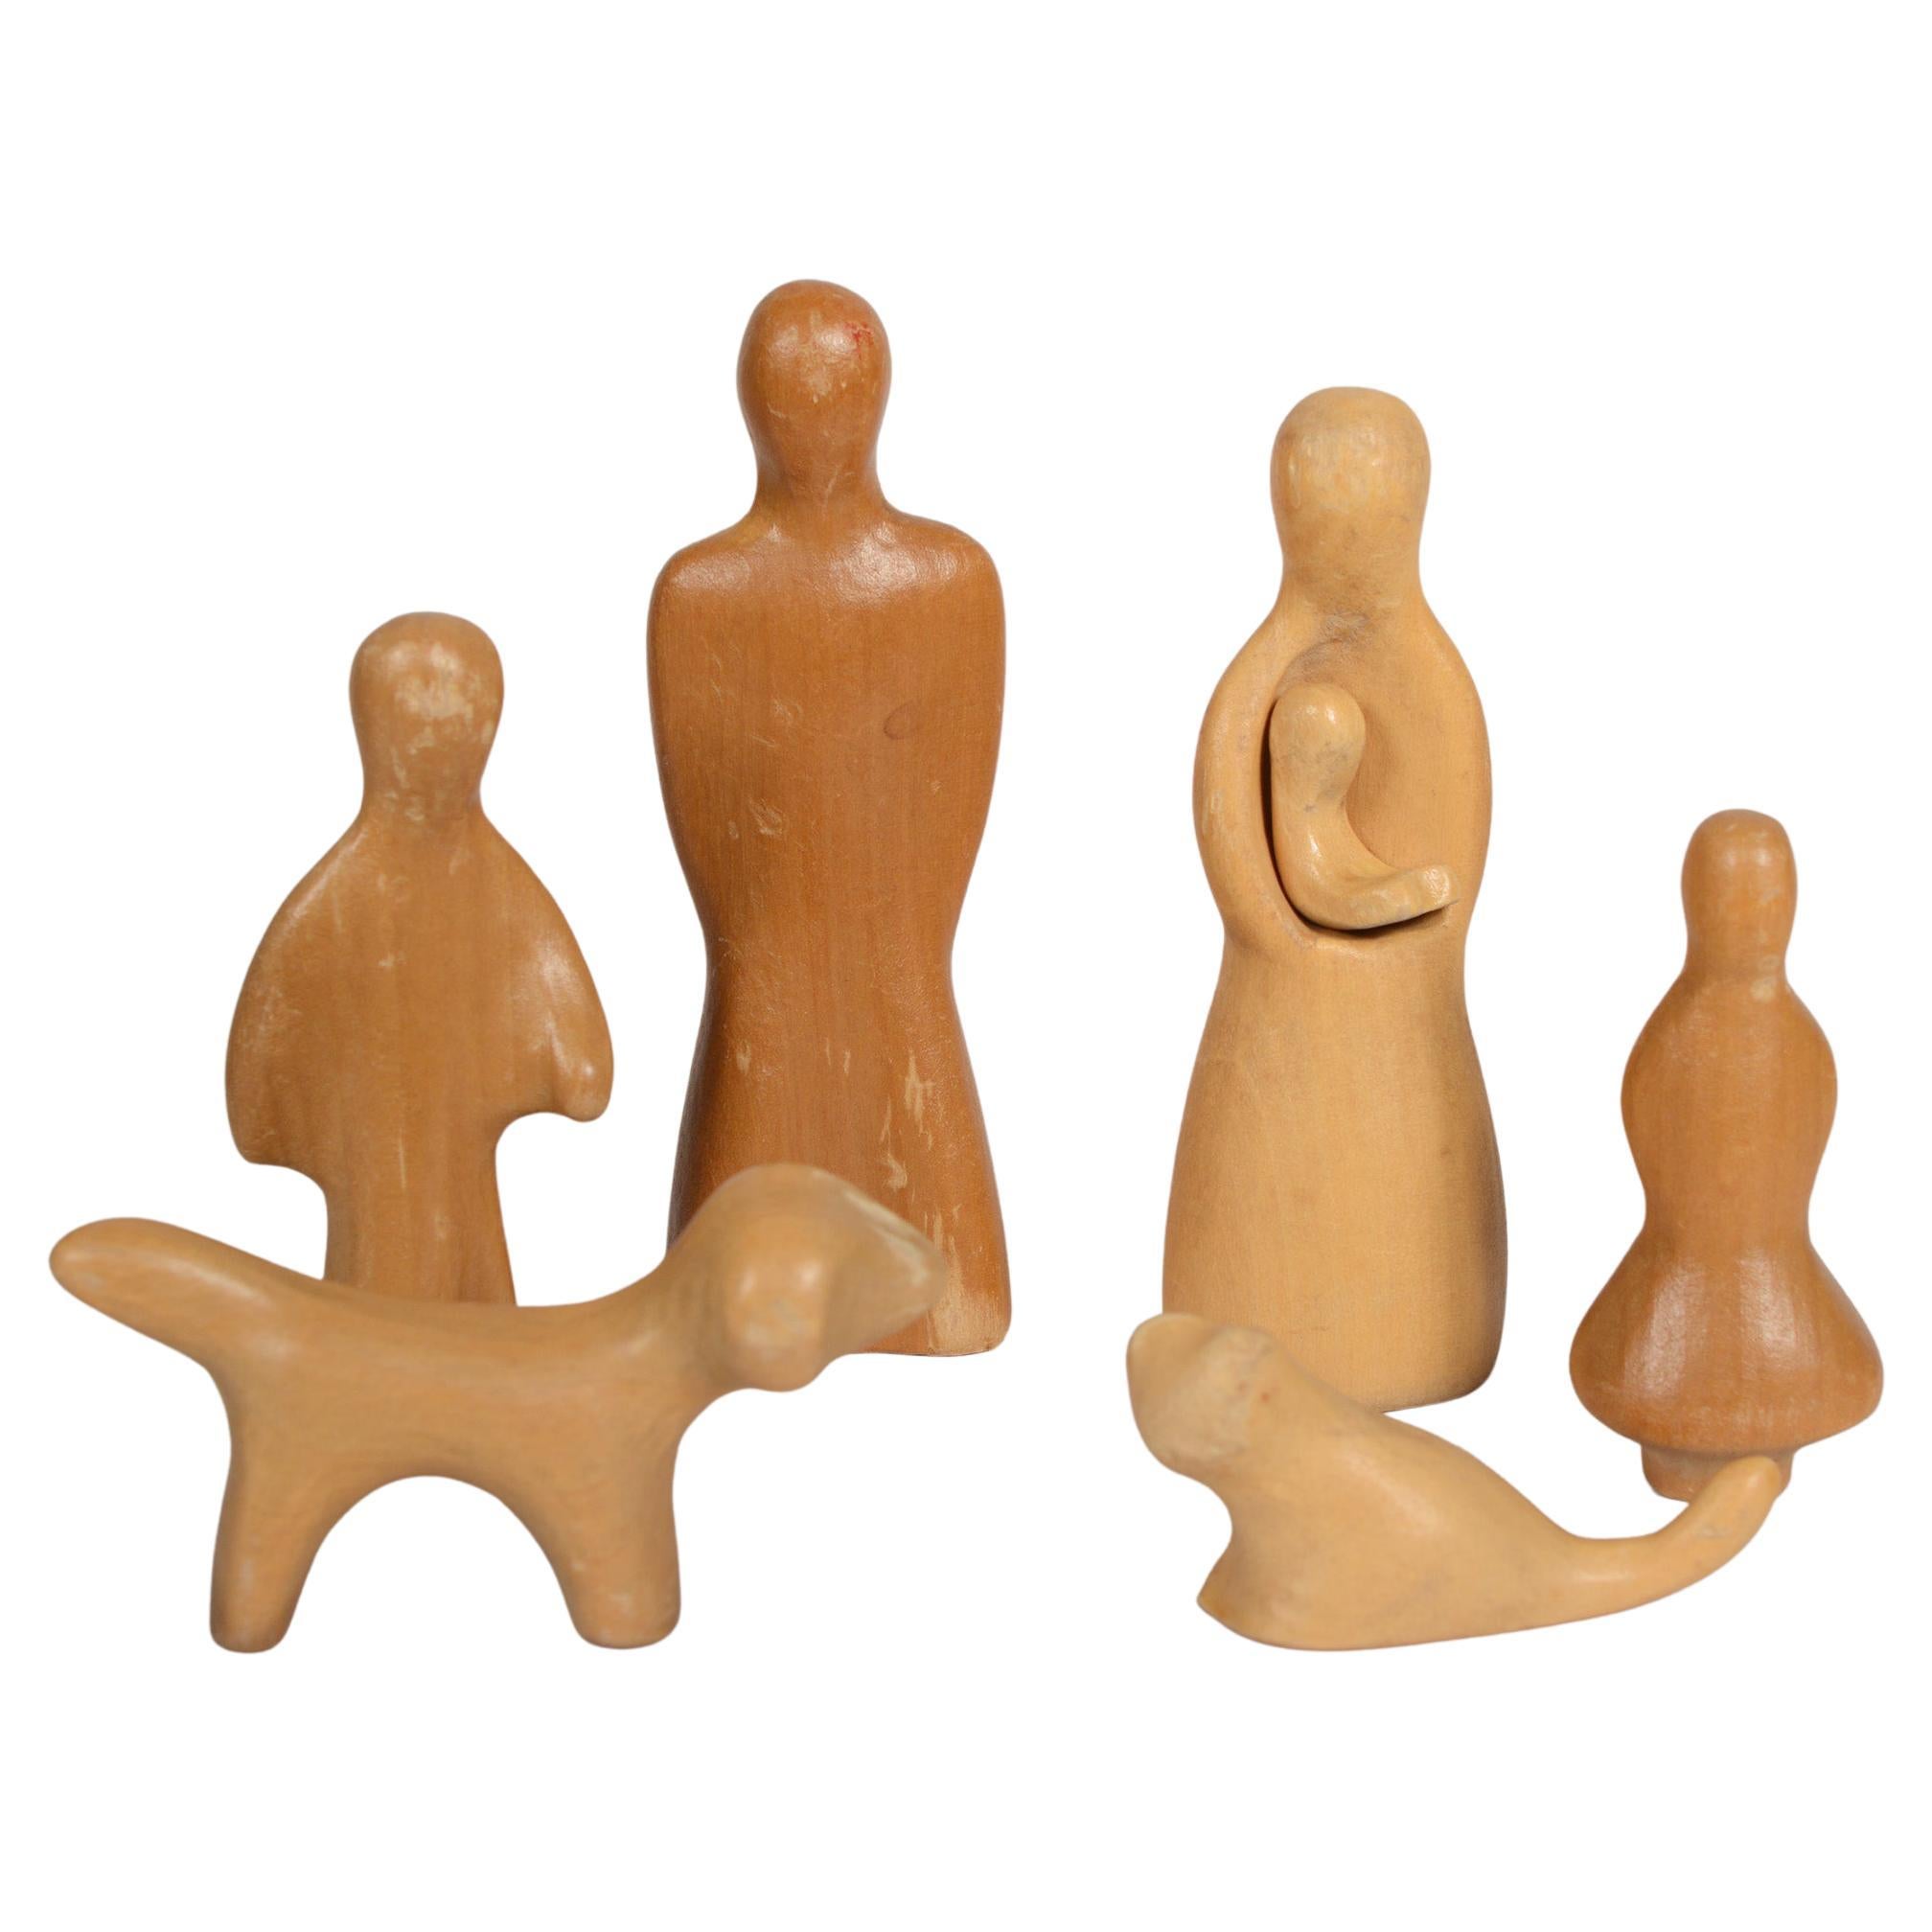 Antonio Vitali Wood Toy Family Set for Creative Playthings